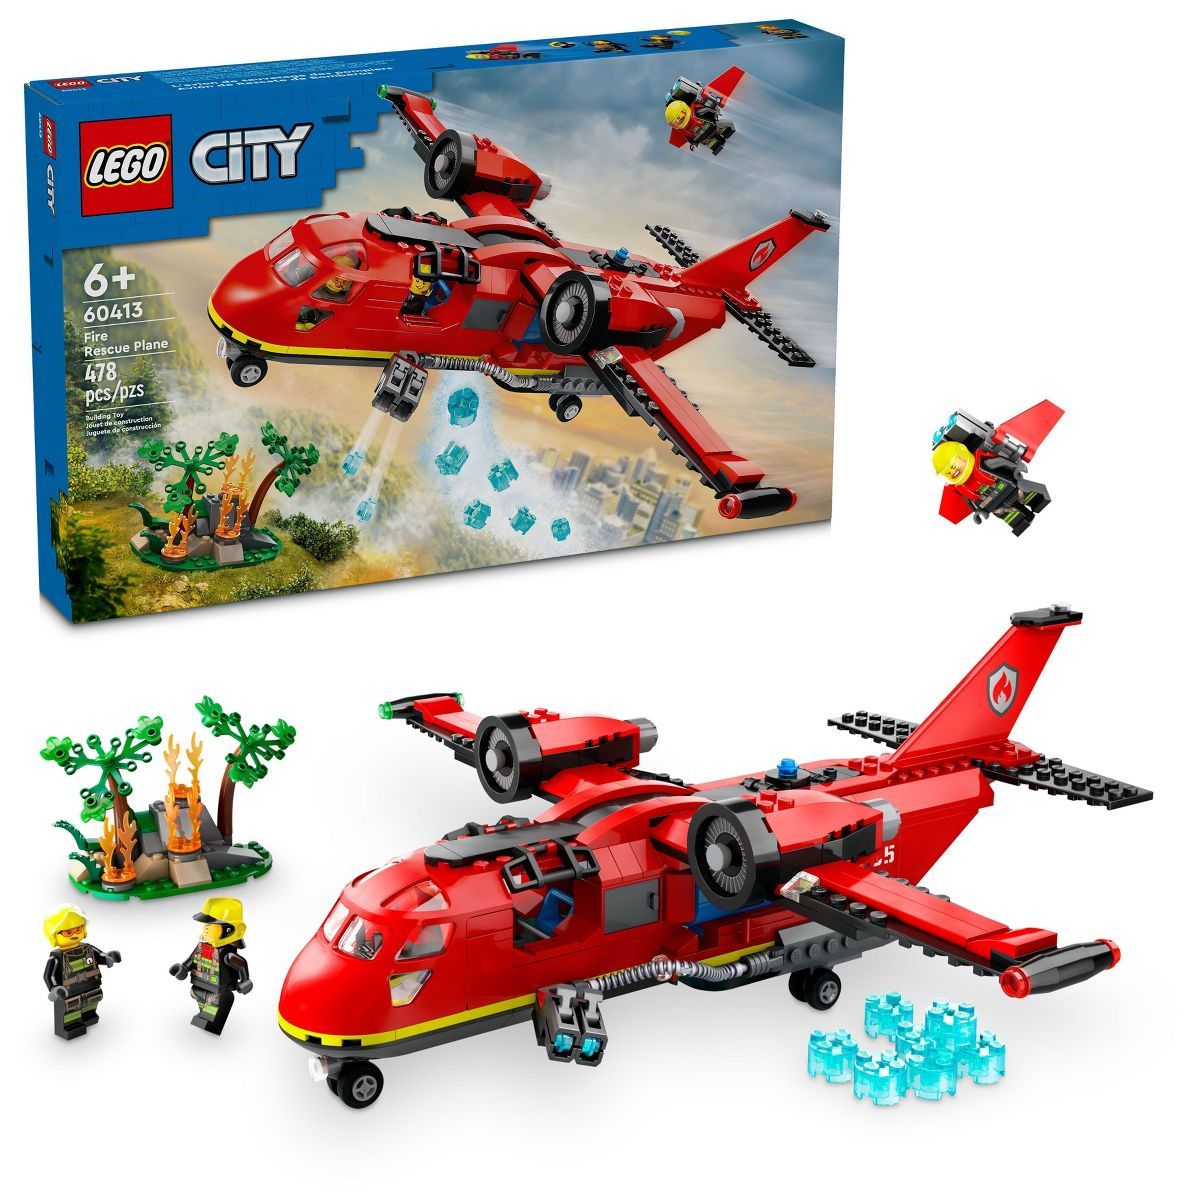 LEGO City Fire Rescue Plane Toy Set 60413 | Target